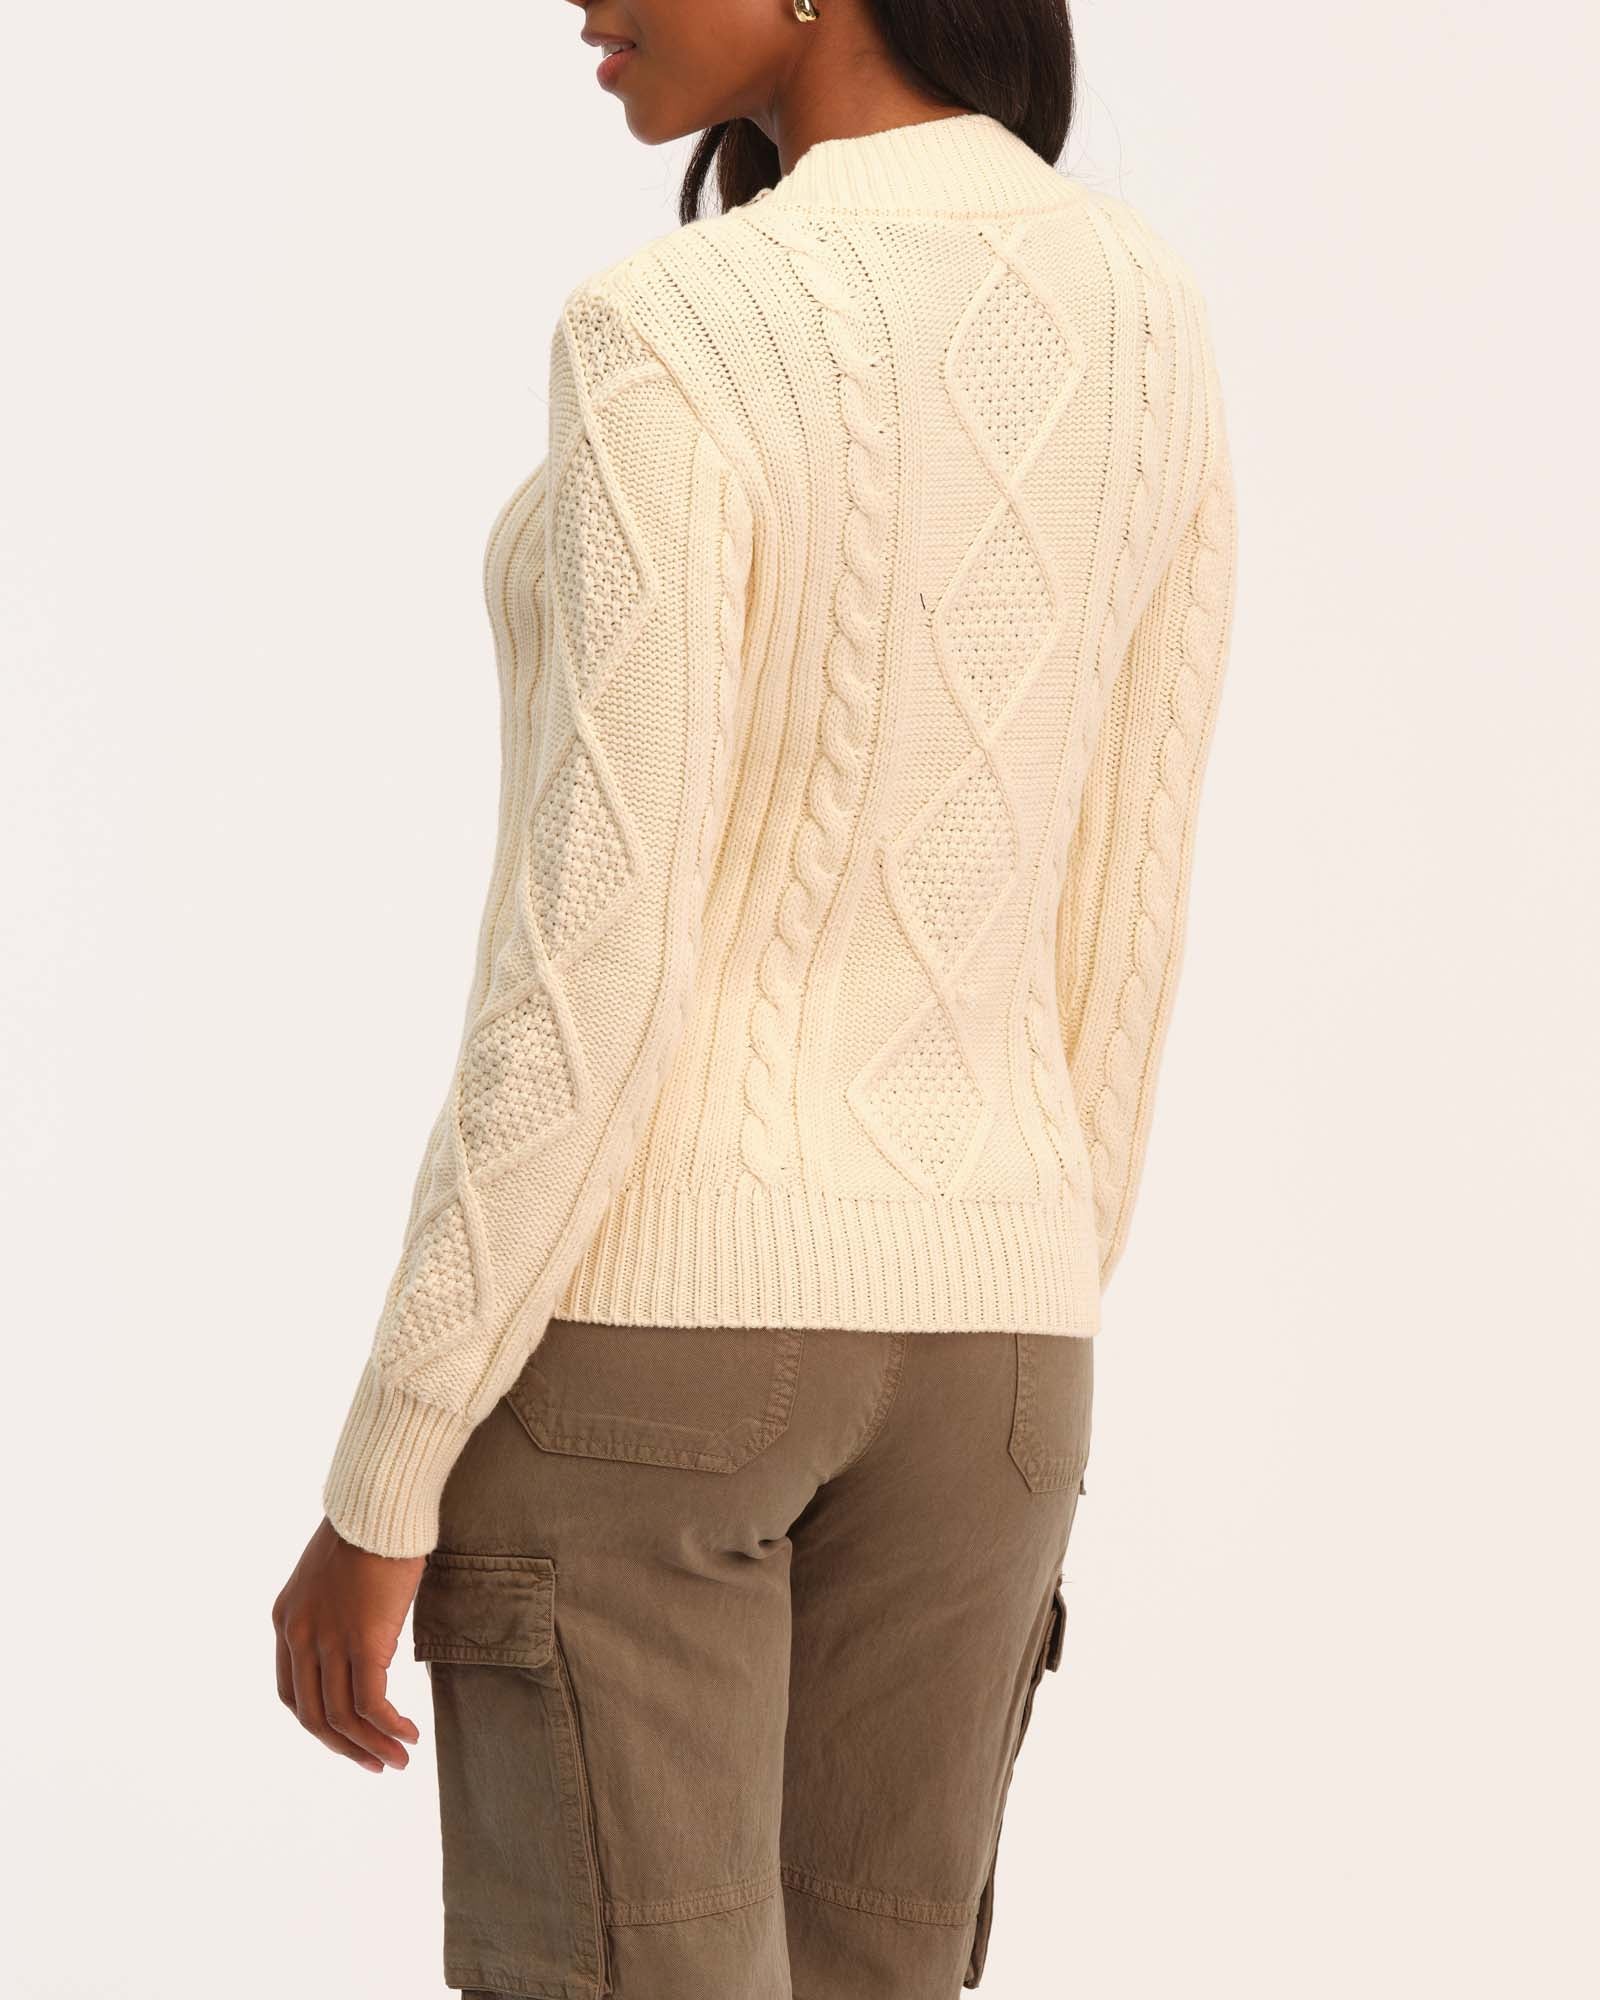 Shop Elie Elie Tahari Women's Cable Knit Sweater with Shoulder Zipper | JANE + MERCER